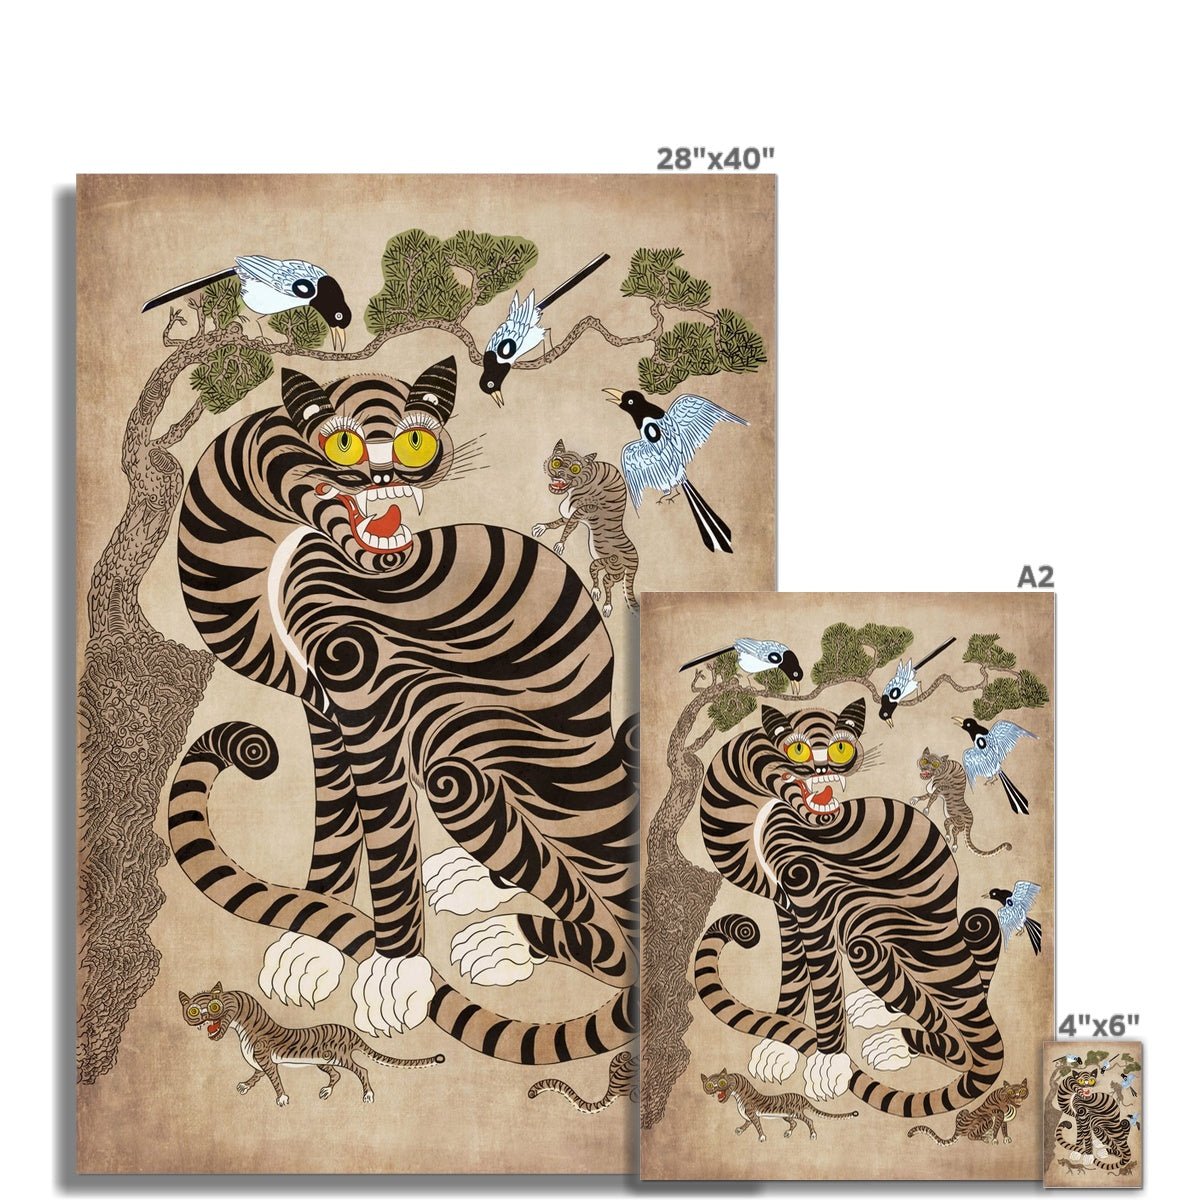 Fine art Rare Vintage Baekdu-daegan Tigers | Classic Korean Mythology Folklore | Nursery, Kid's Room Fun Jungle Decor | Cute Kawaii Fine Art Print